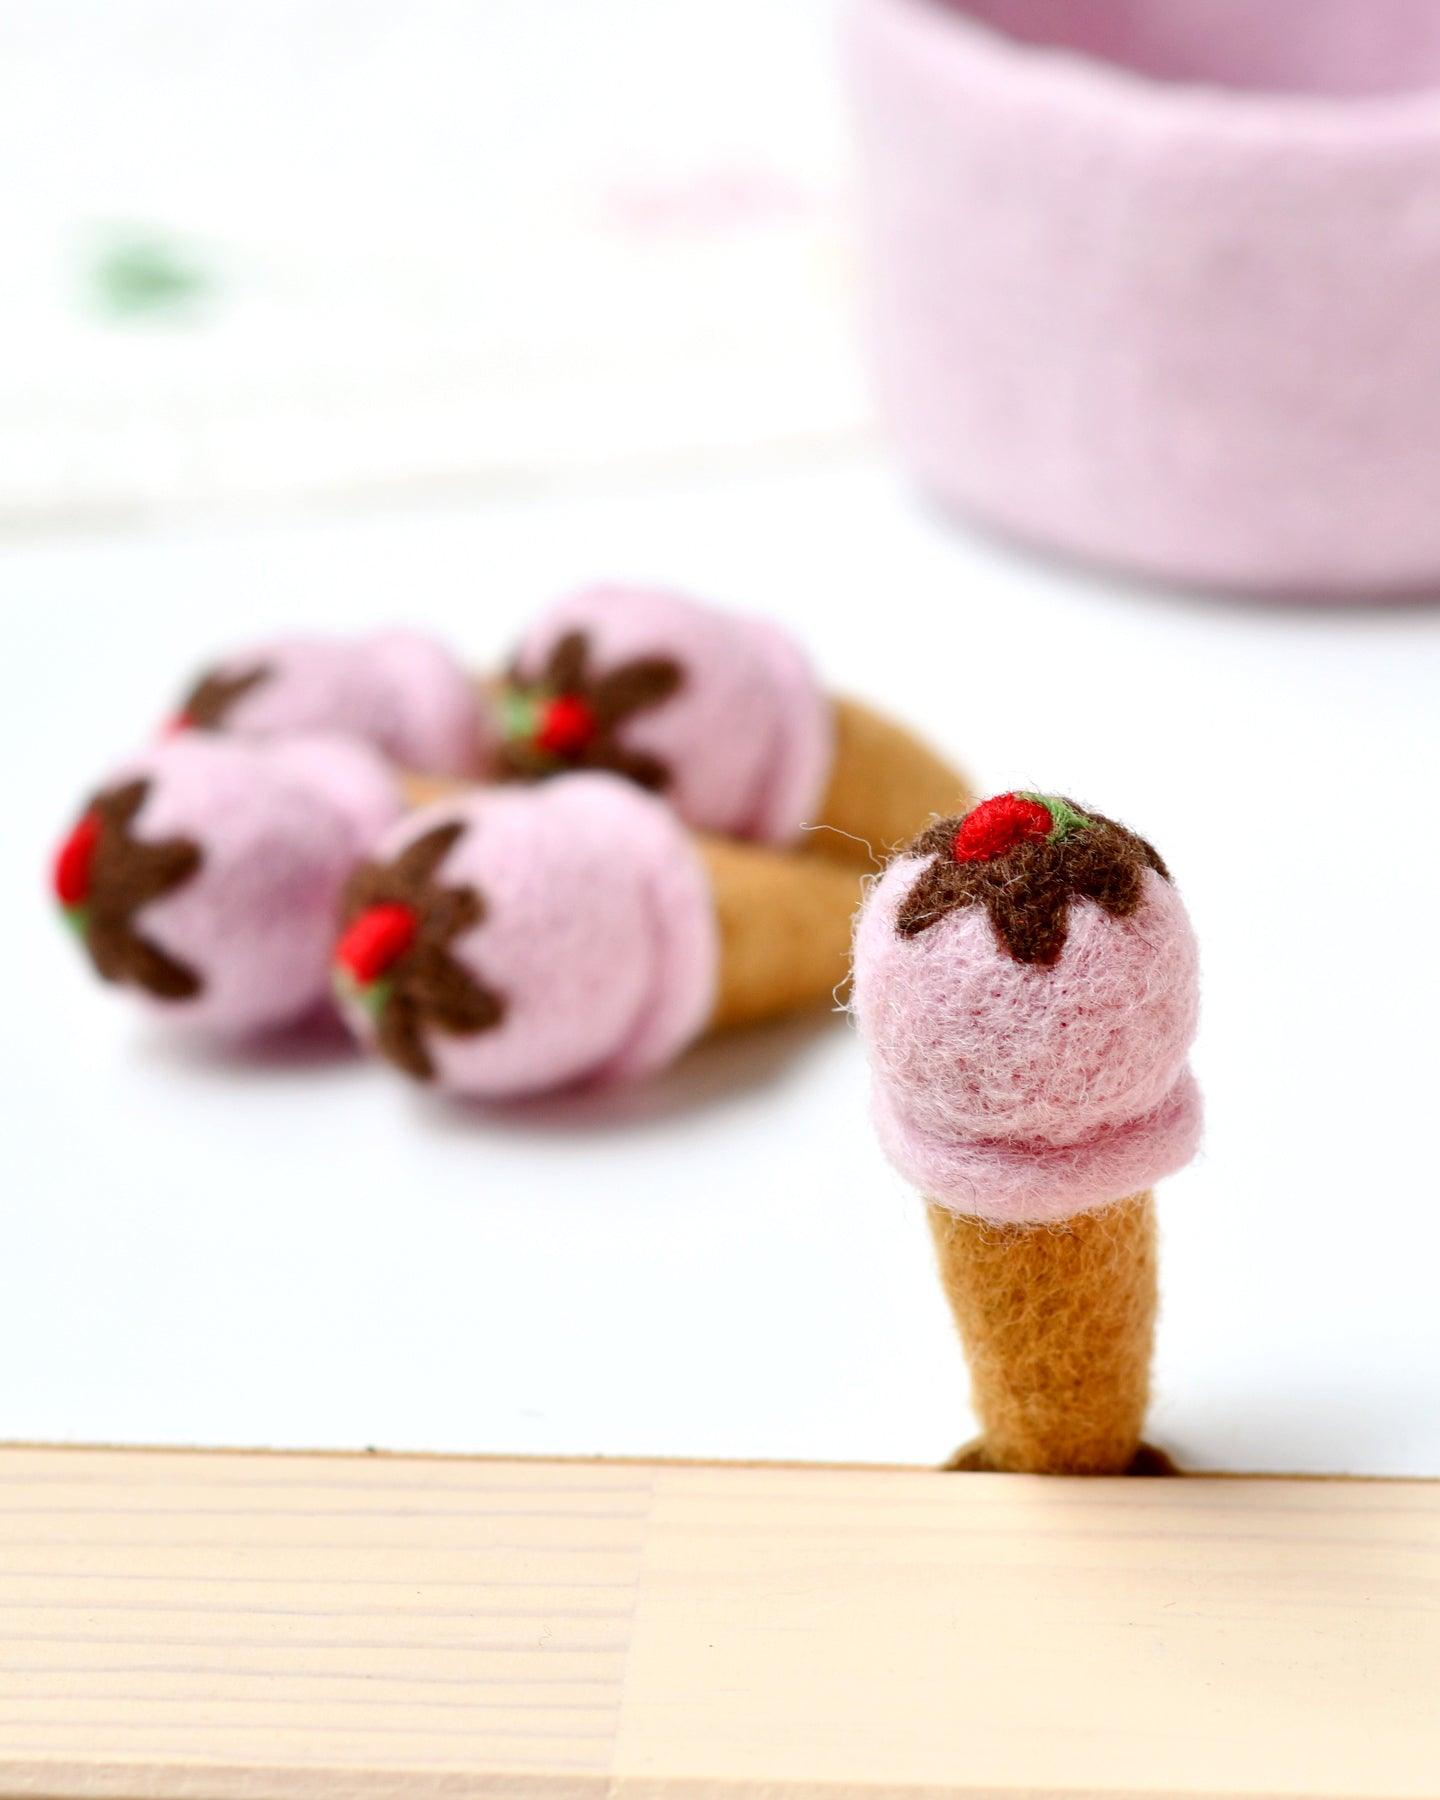 Felt Ice Creams - Strawberry with Chocolate Sauce - Tara Treasures